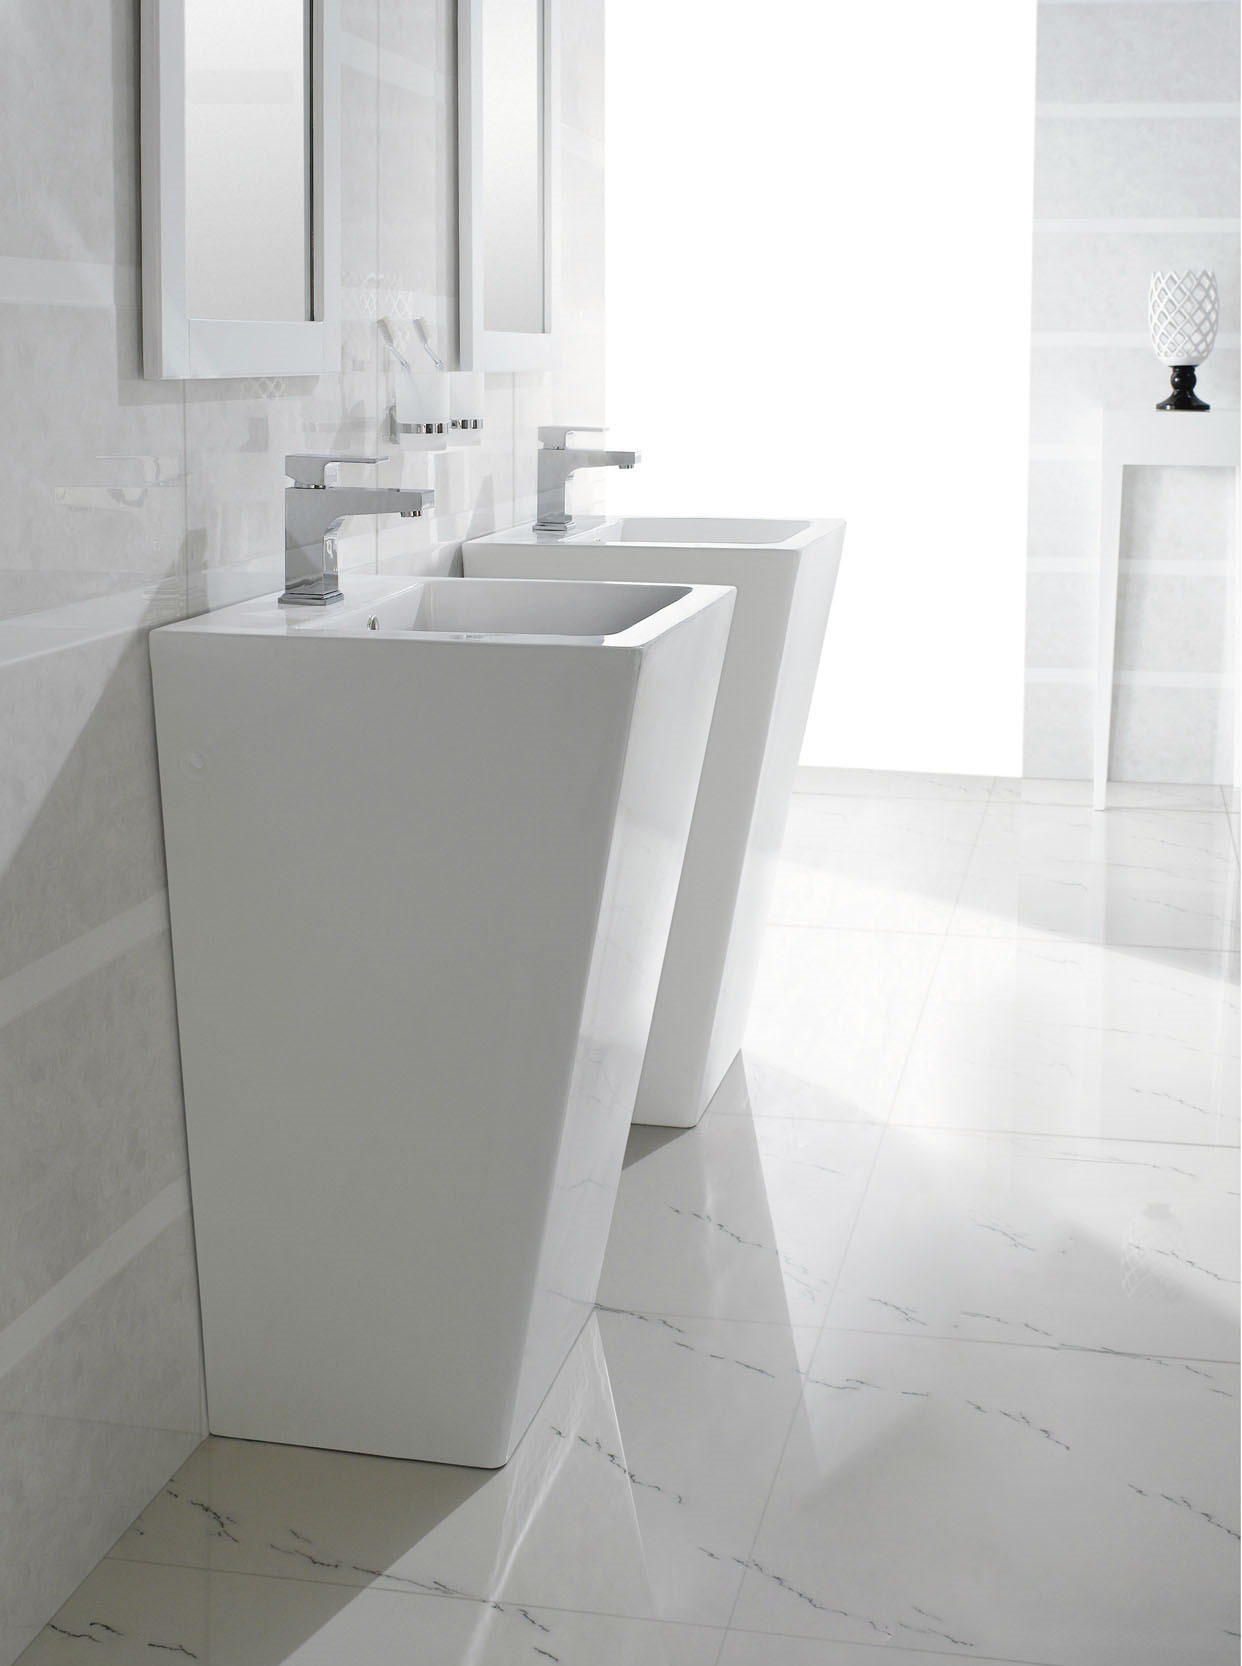 Cabinets pedestal sinks bresica modern bathroom pedestal sink tweet